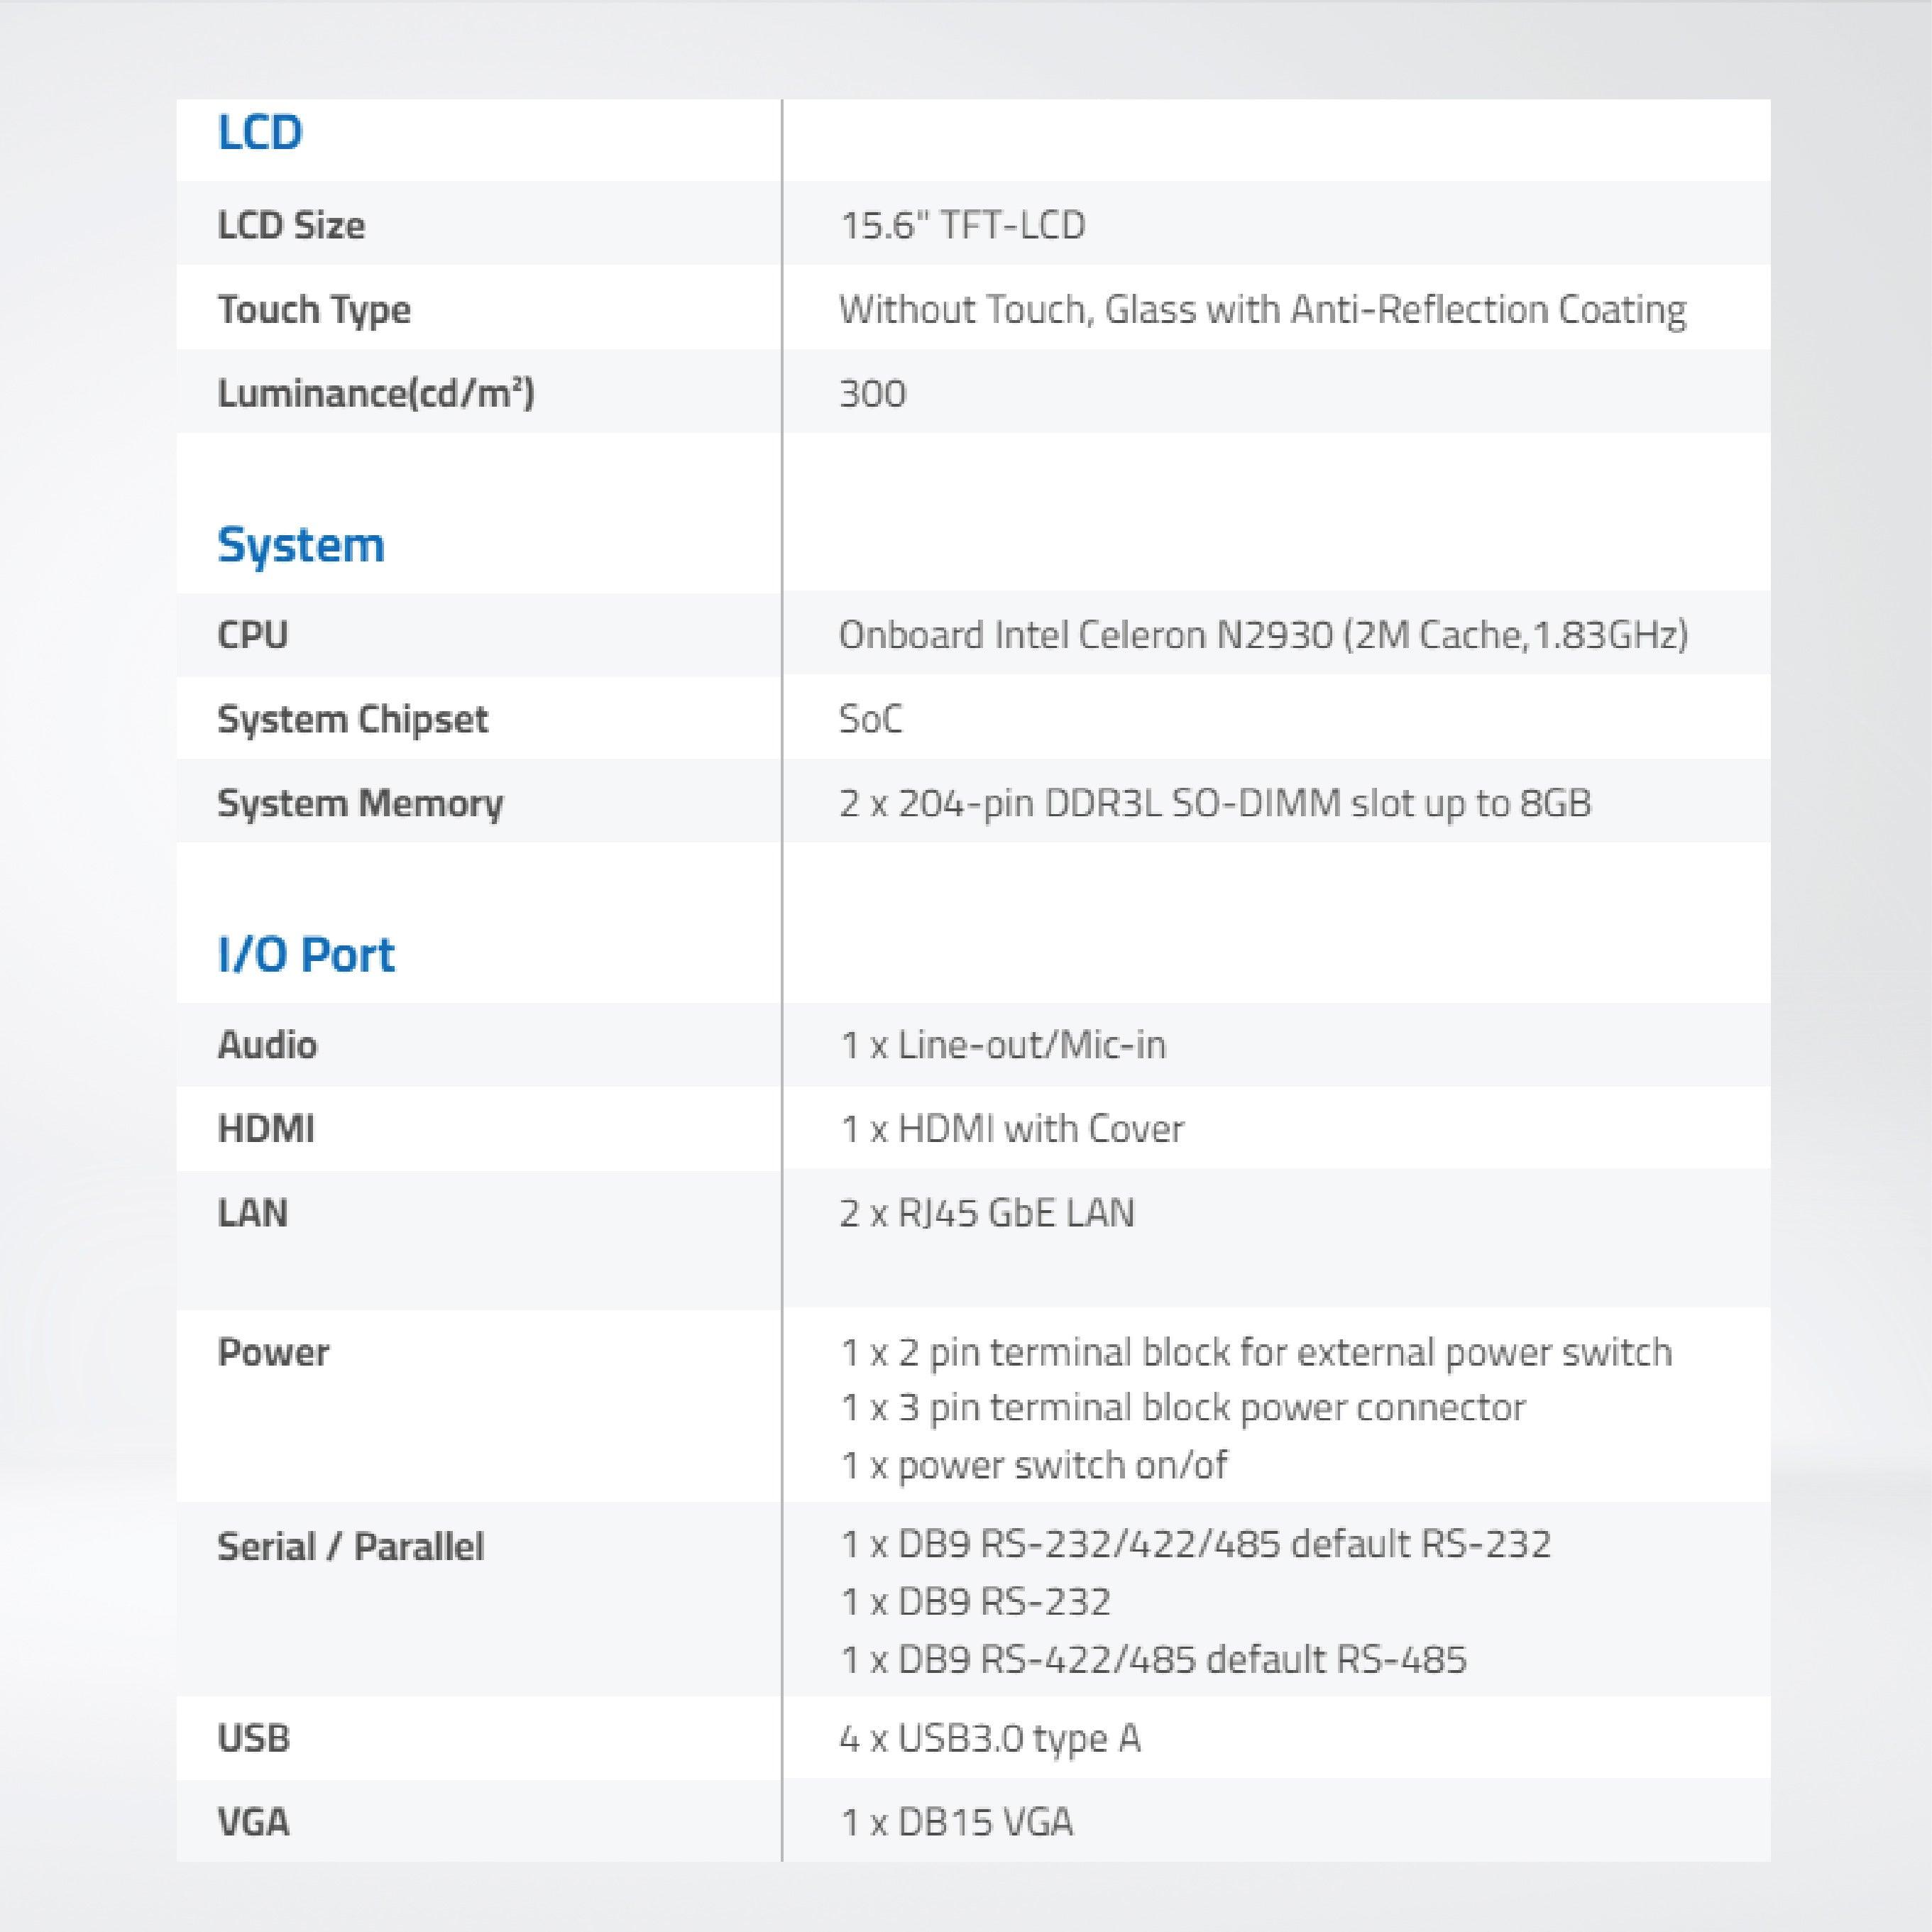 ViPAC-816G 15.6” Intel Celeron N2930 Fanless Expandable Panel PC - Riverplus